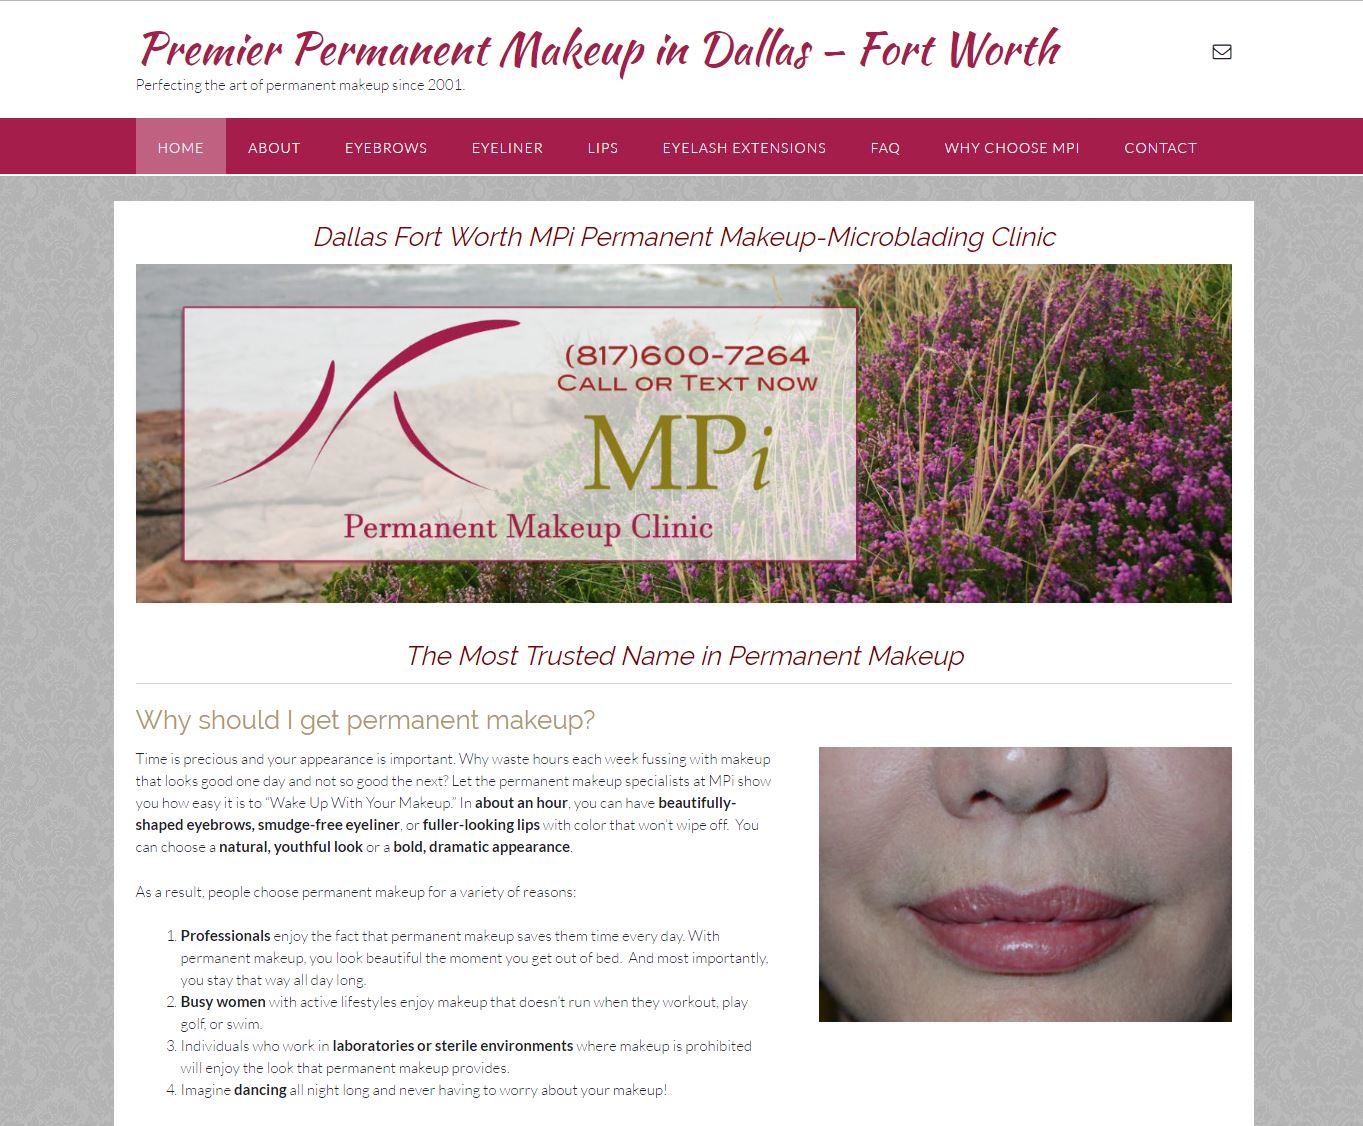 MPi Permanent Makeup-Microblading Clinic